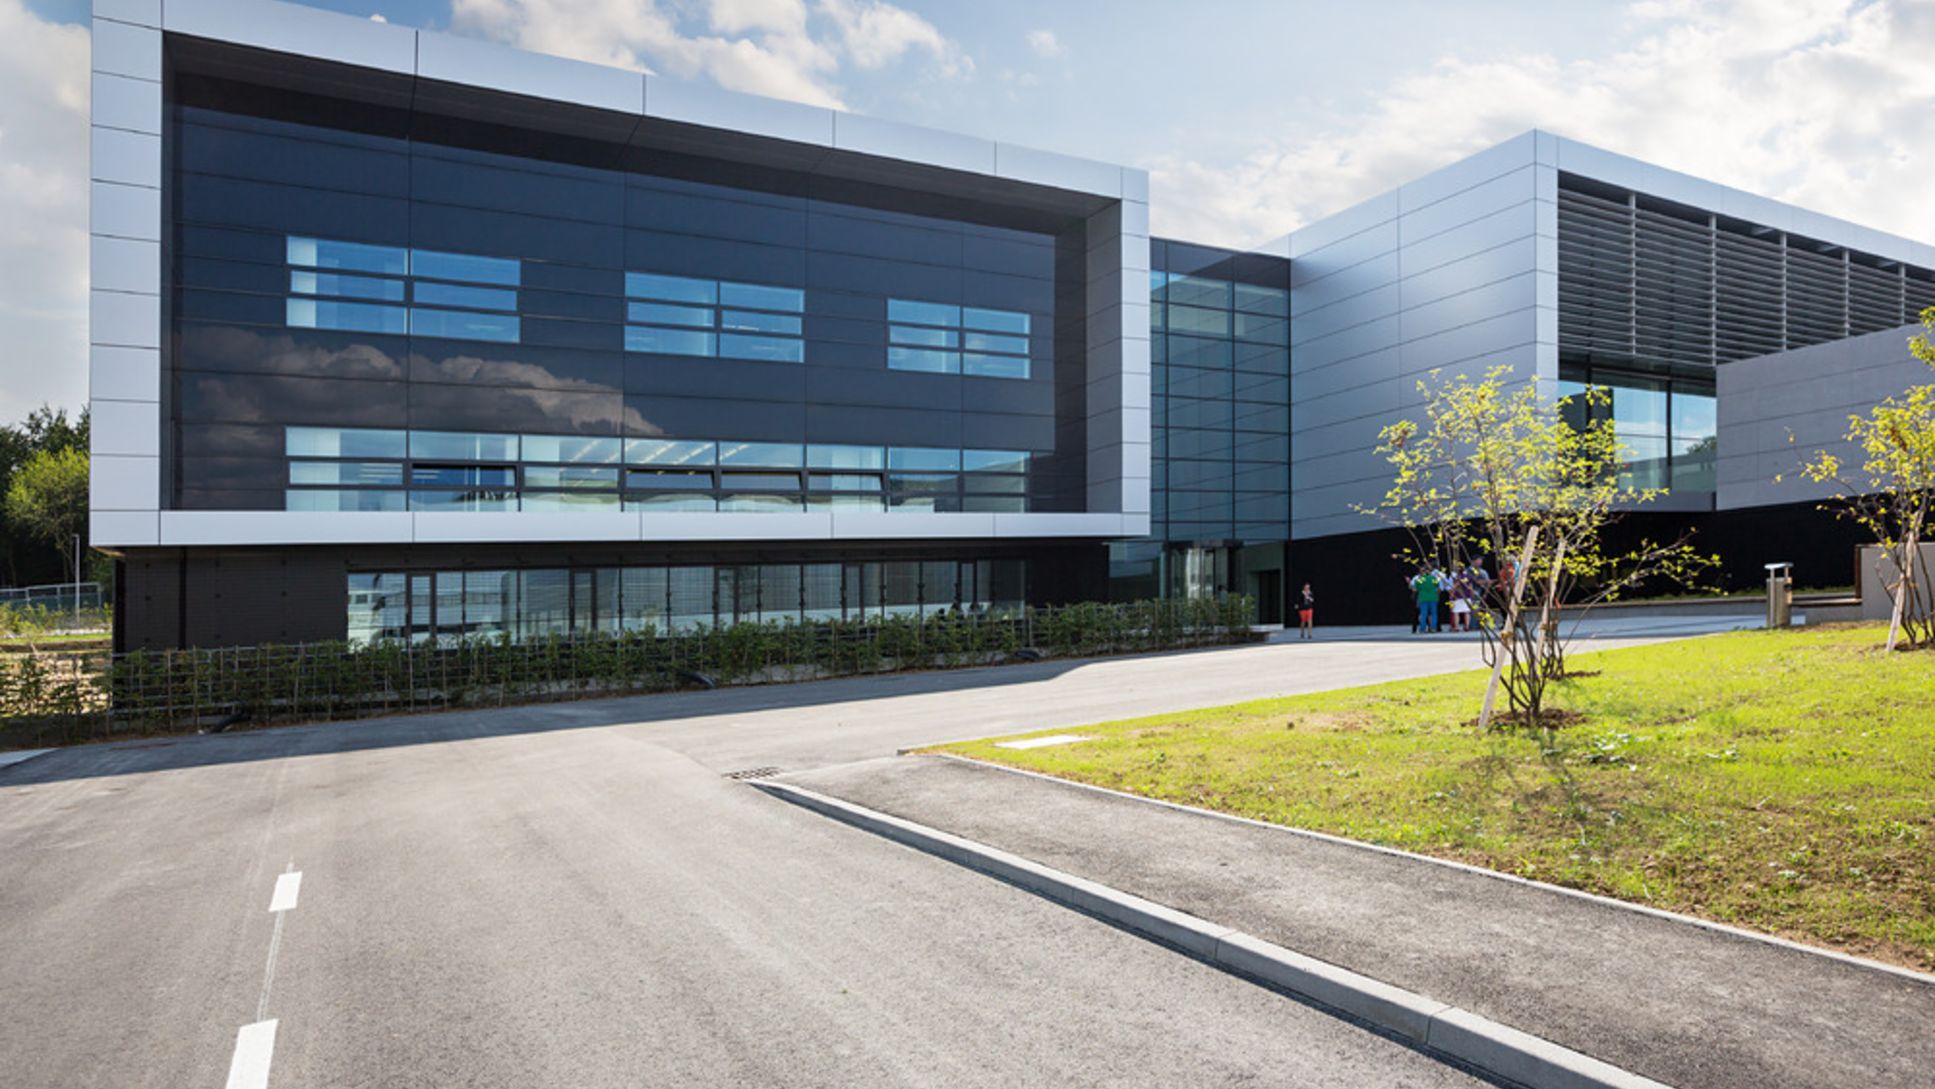 Design studio and concept building, Weissach, 2014, Porsche AG